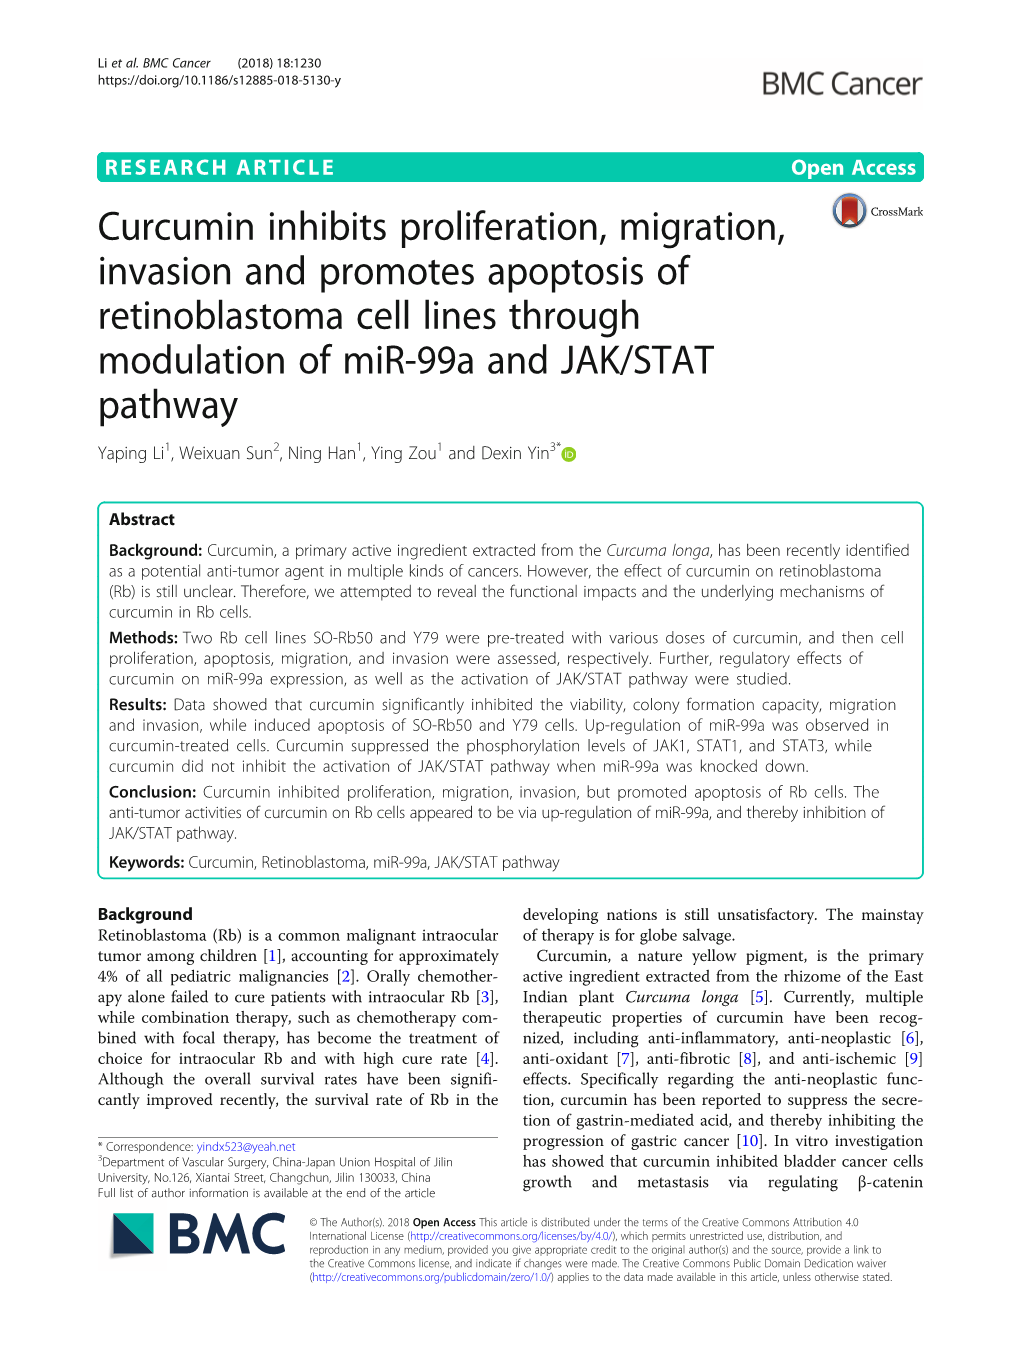 Curcumin Inhibits Proliferation, Migration, Invasion and Promotes